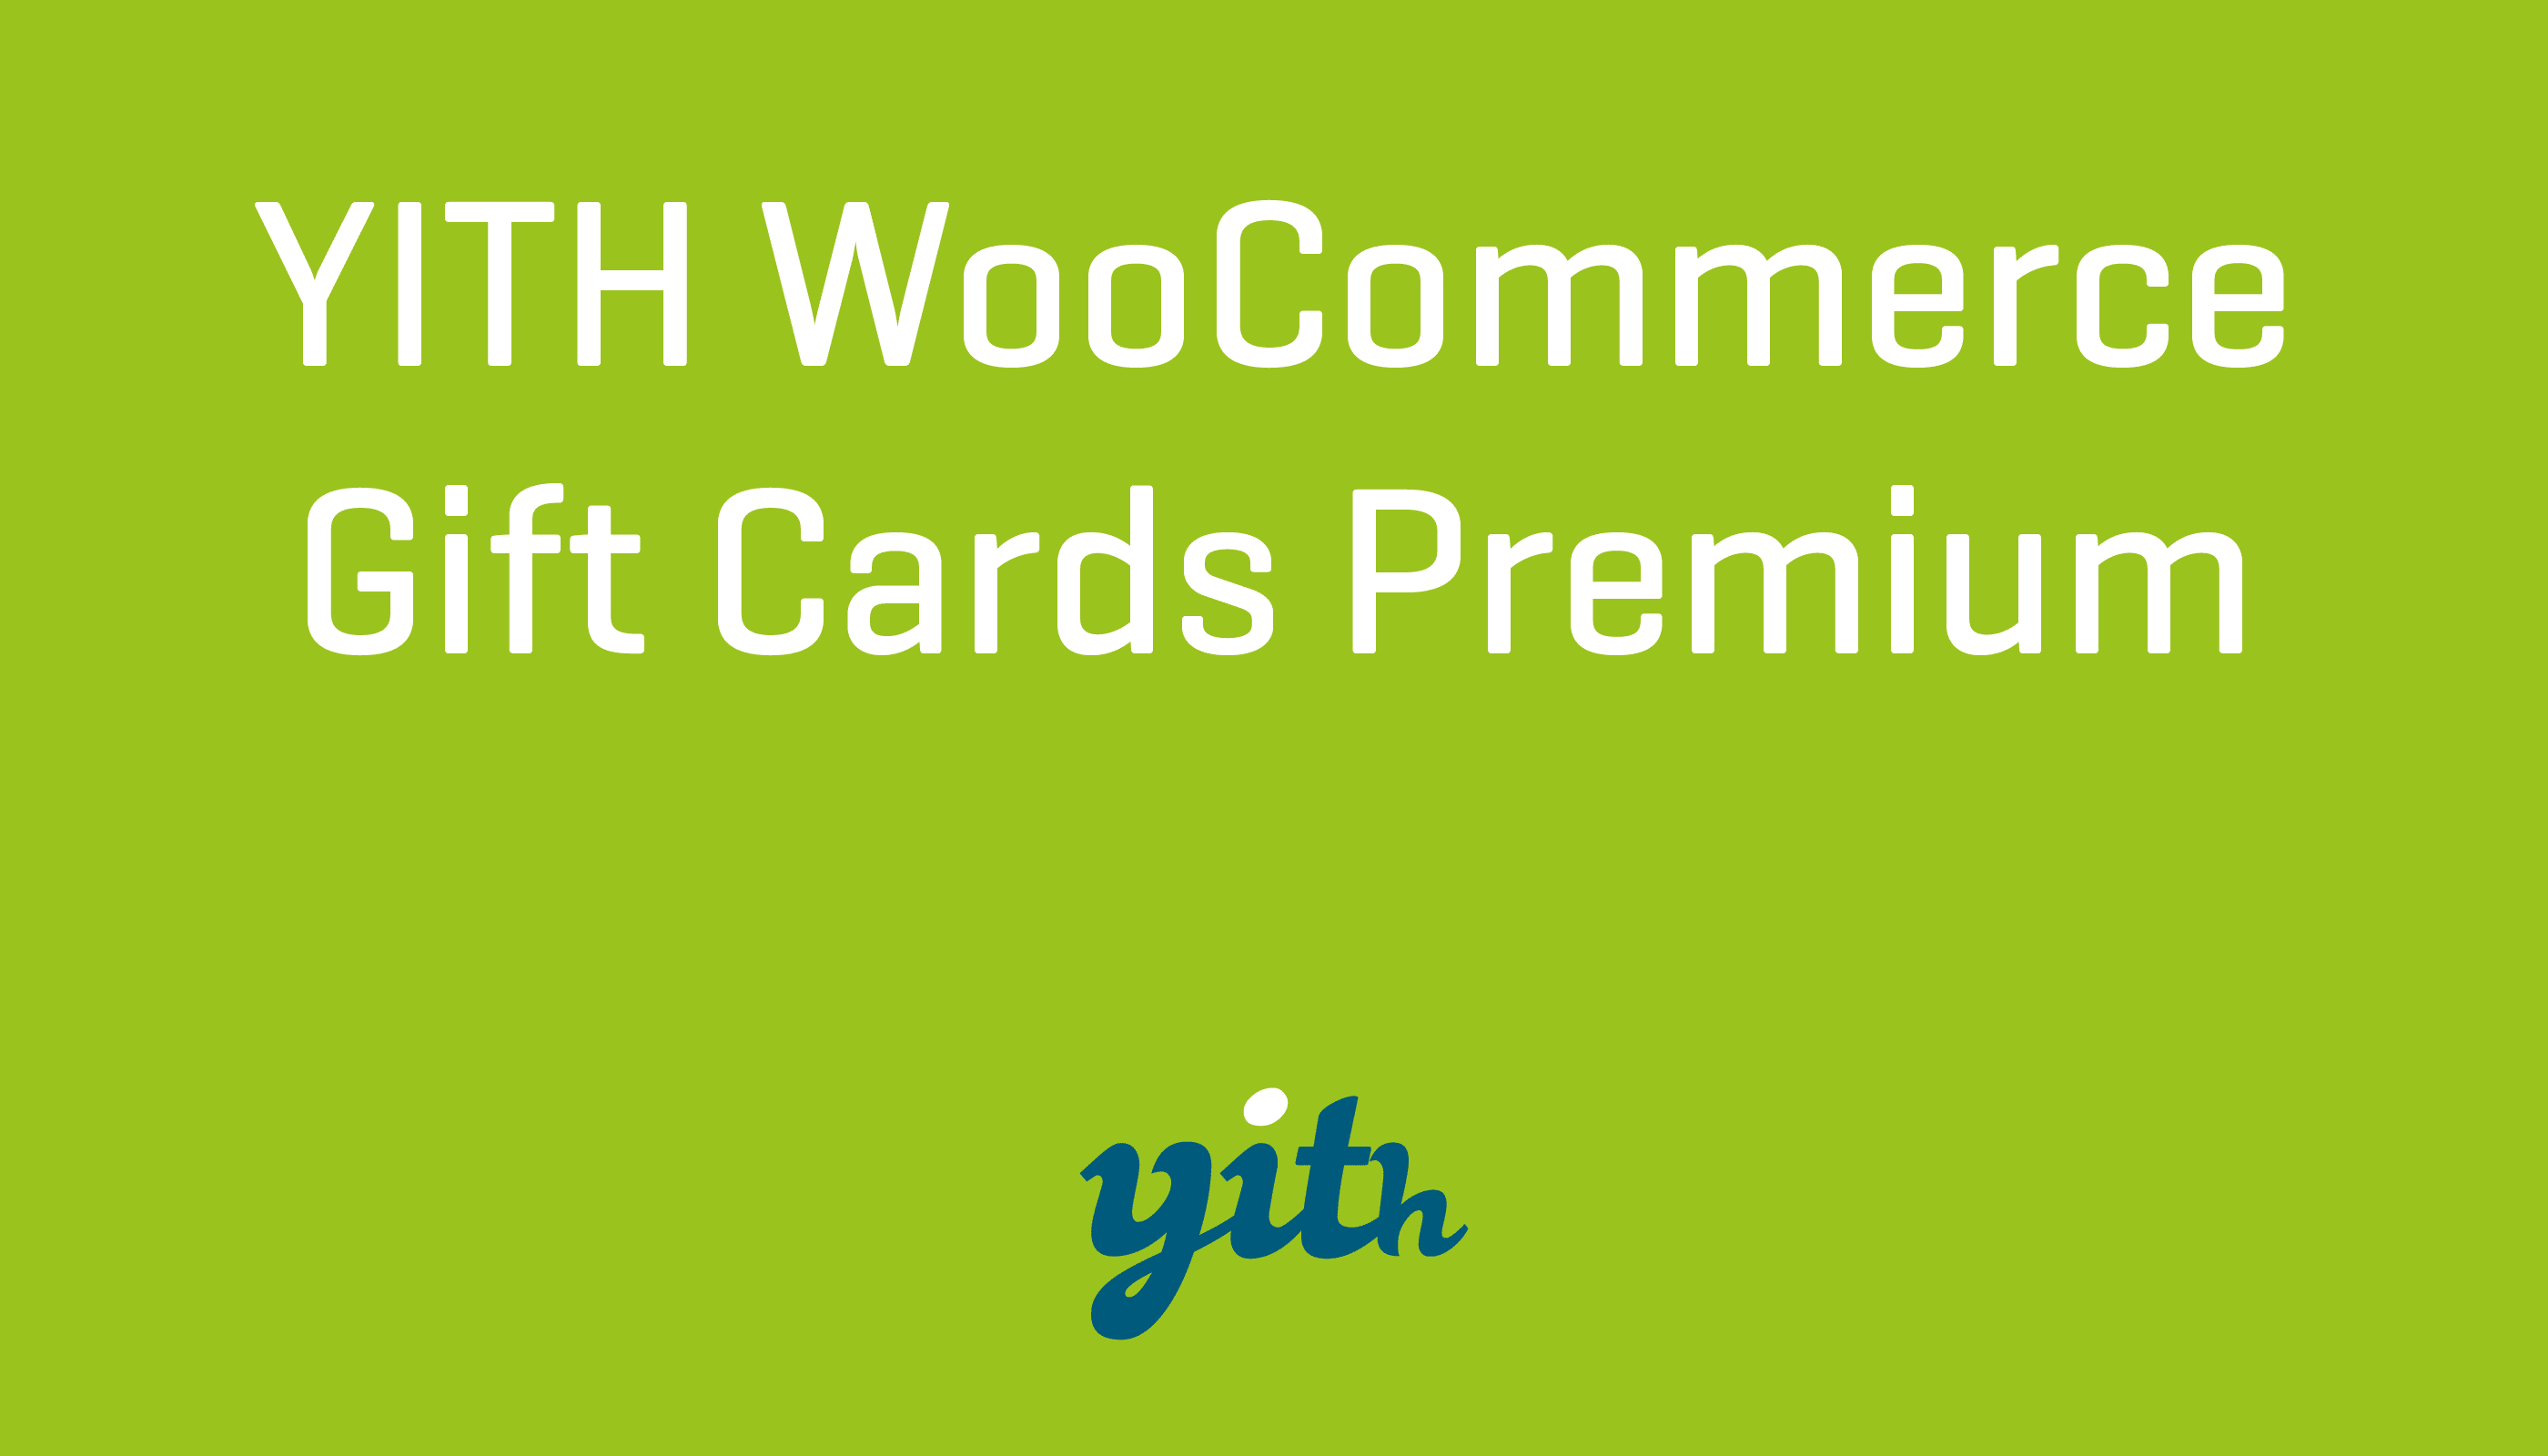 Yith WooCommerce Gift Cads Premium